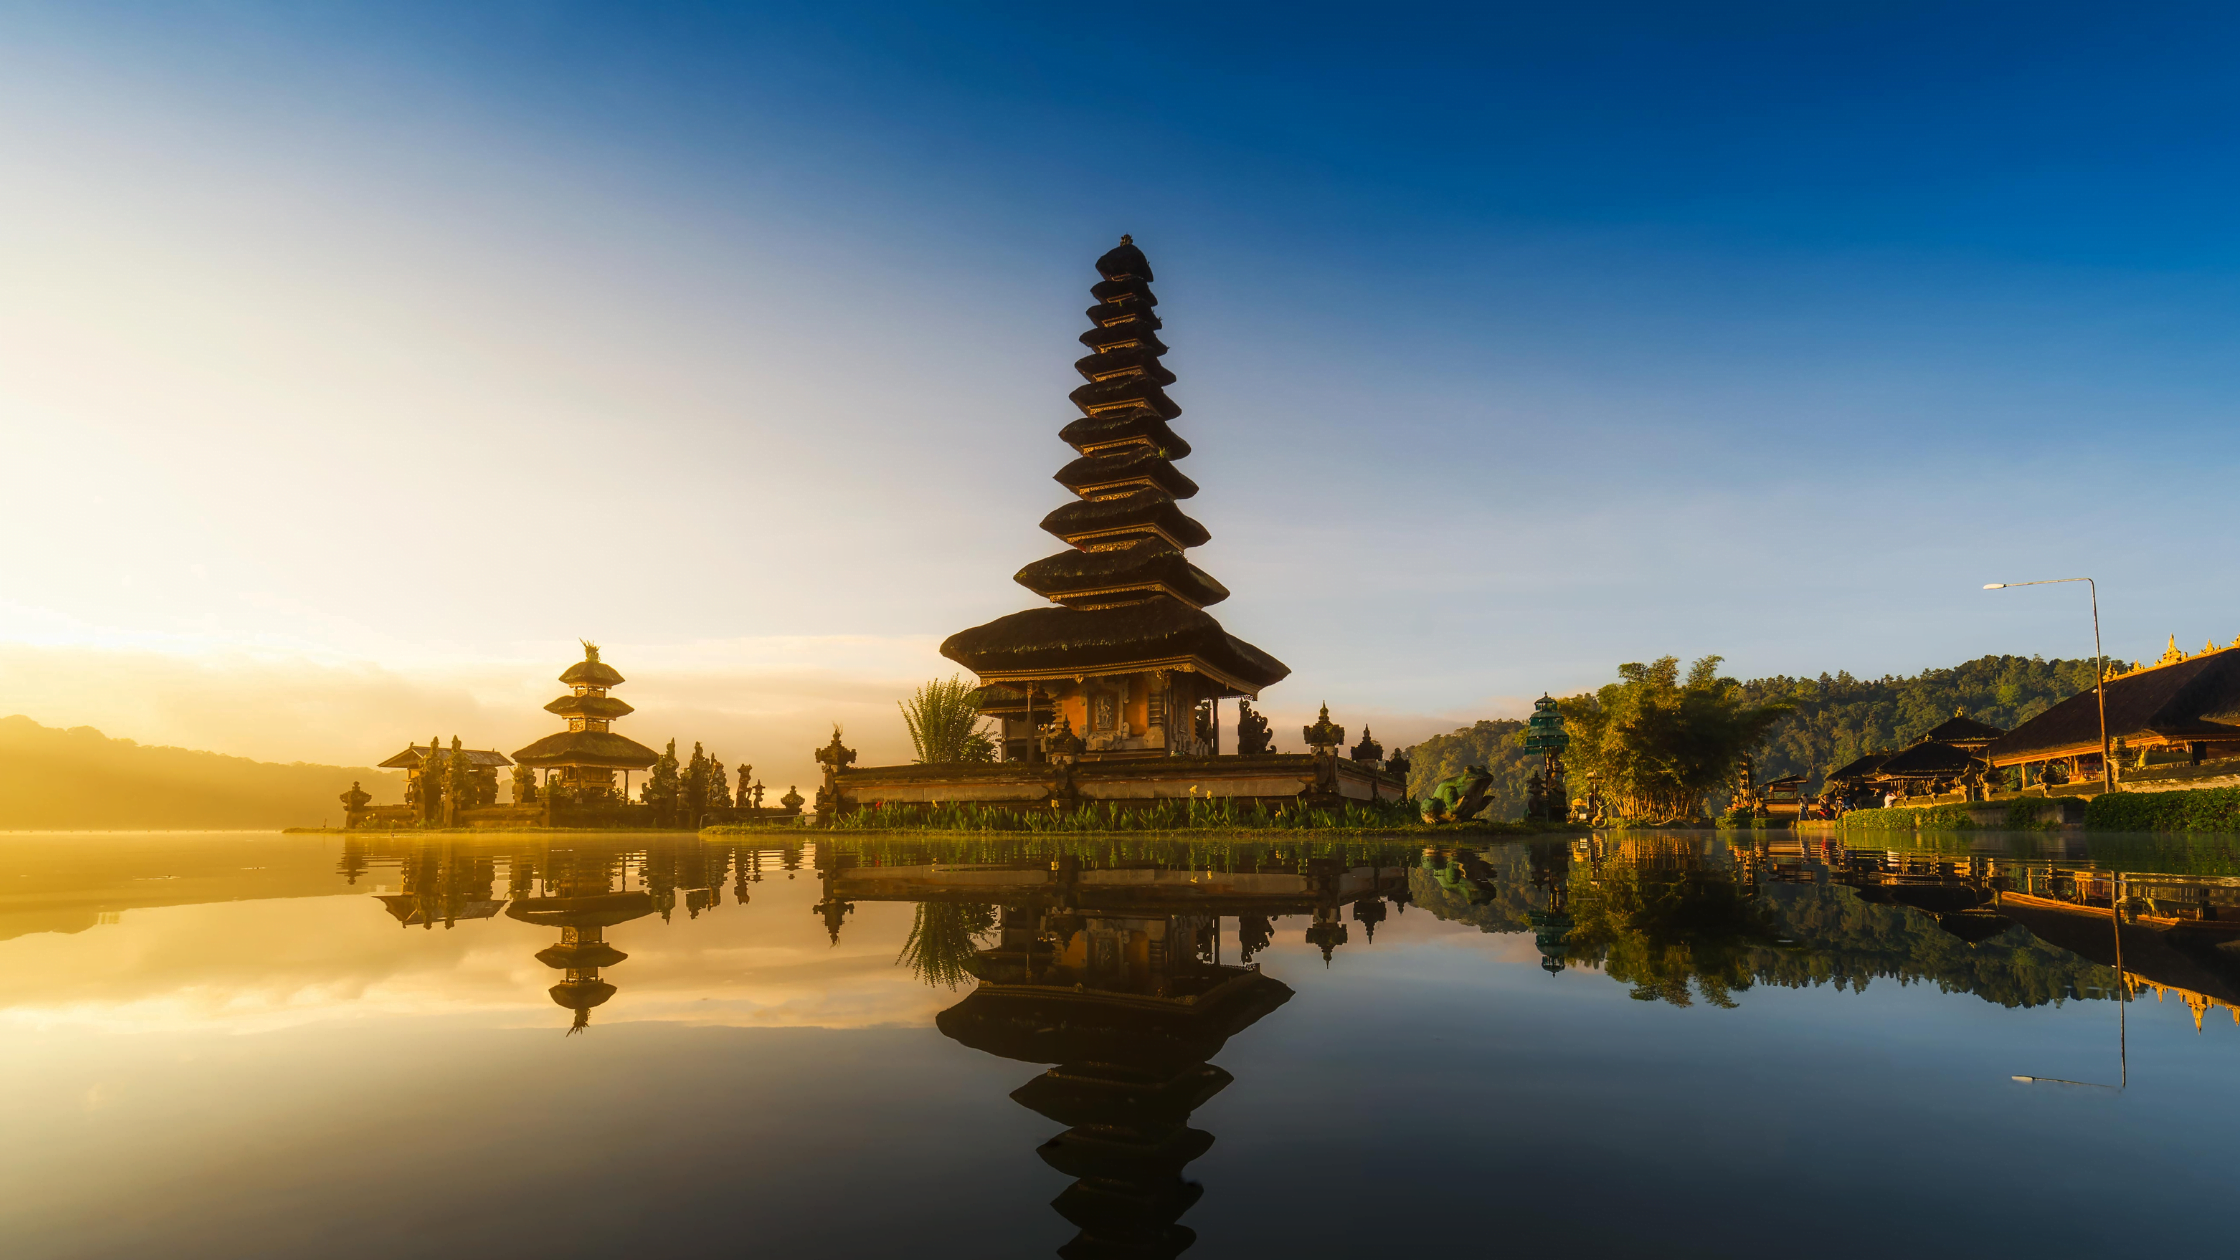 Insula Bali